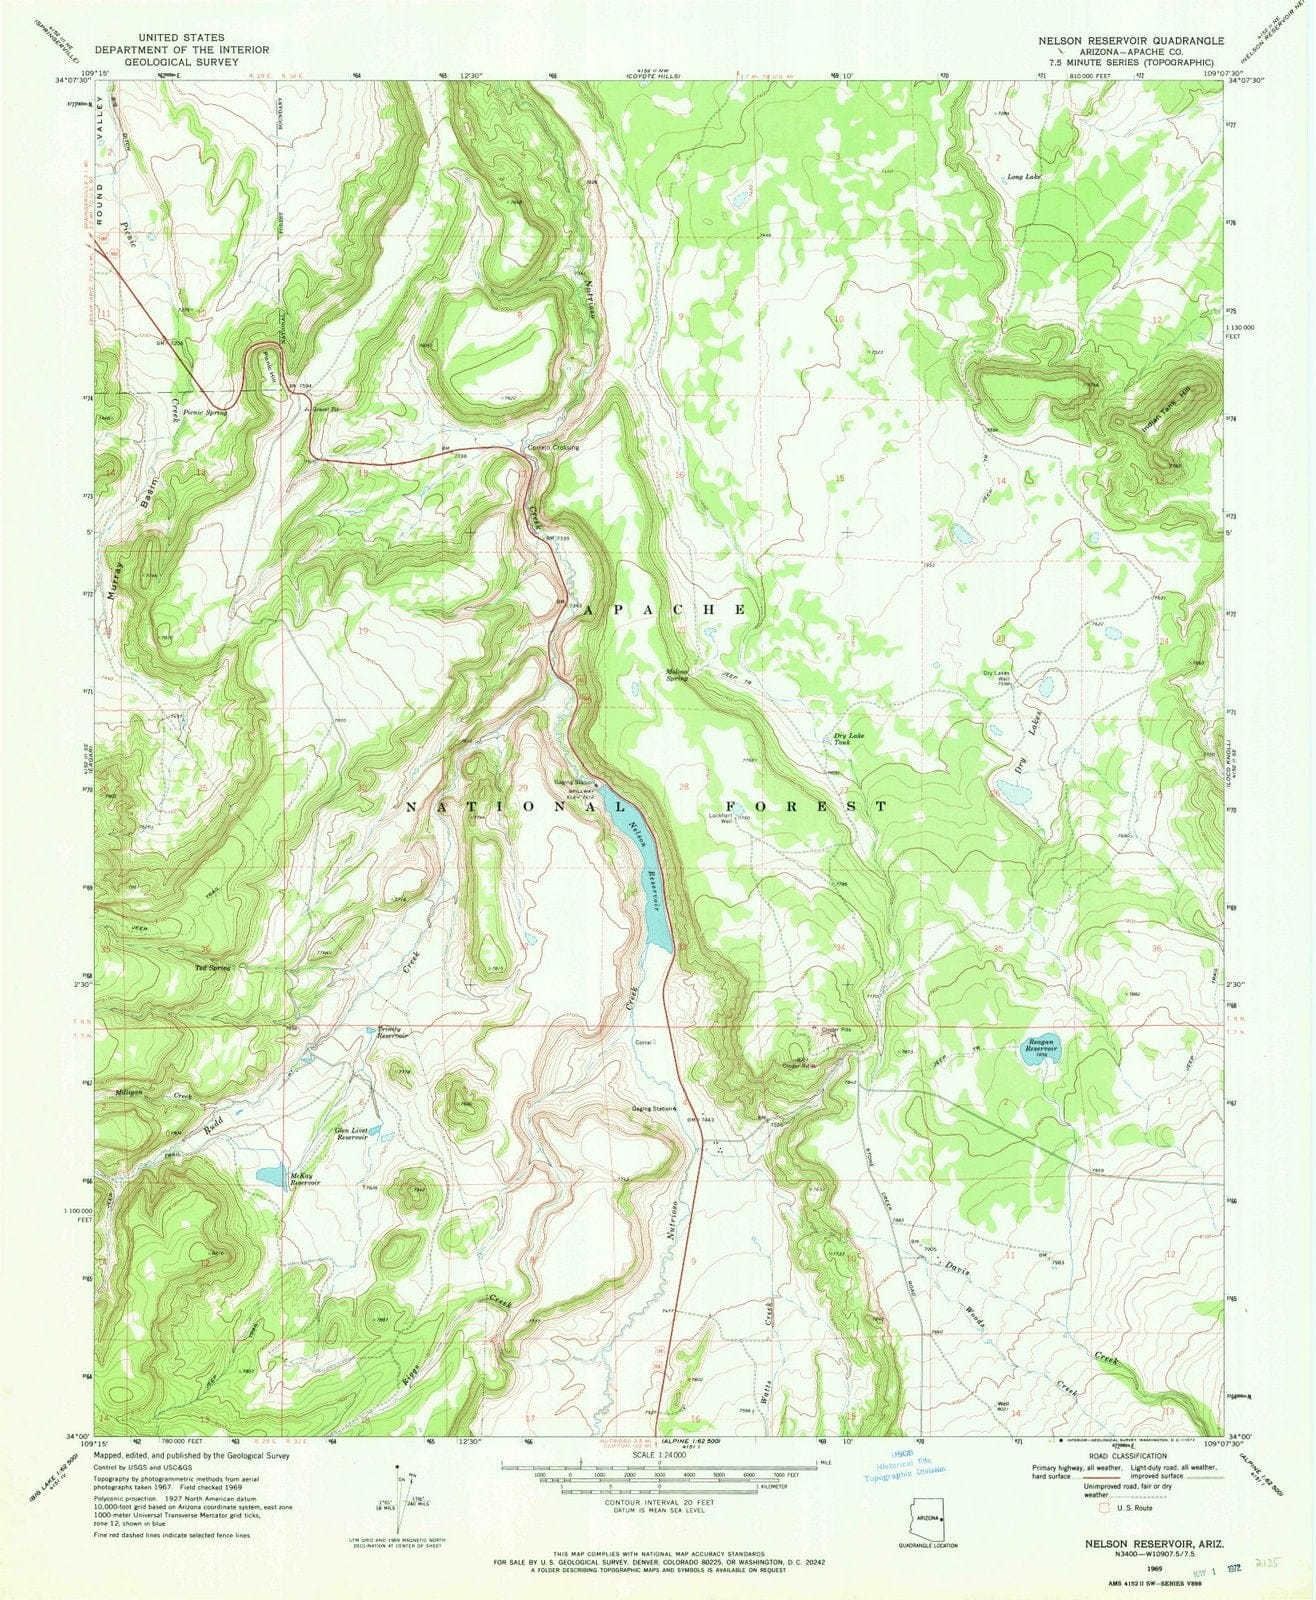 1969 Nelson Reservoir, AZ - Arizona - USGS Topographic Map